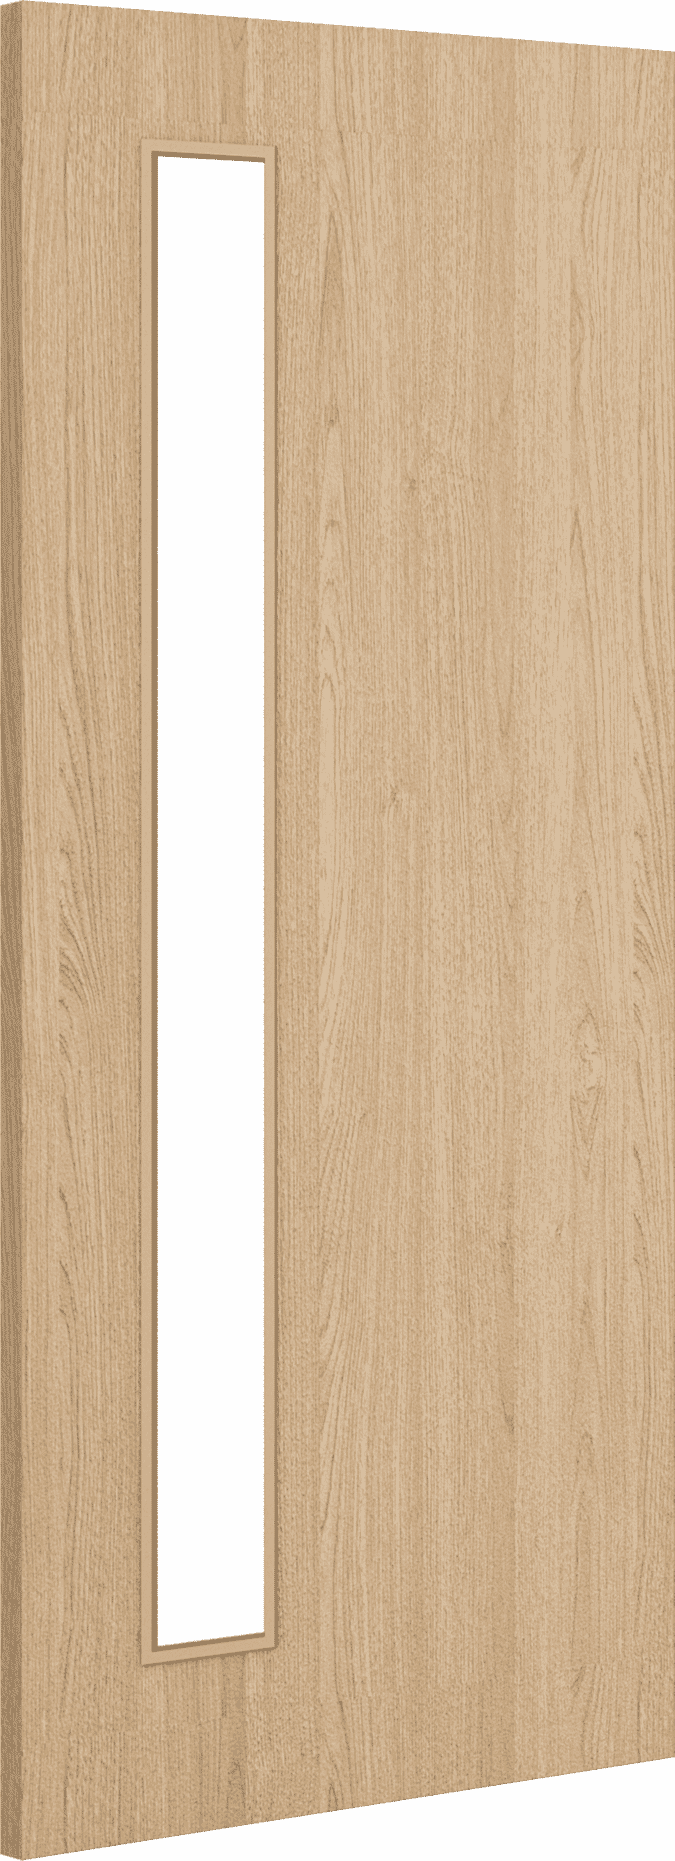 2040mm x 926mm x 44mm Architectural Oak 06 Frosted Glazed - Prefinished FD30 Fire Door Blank